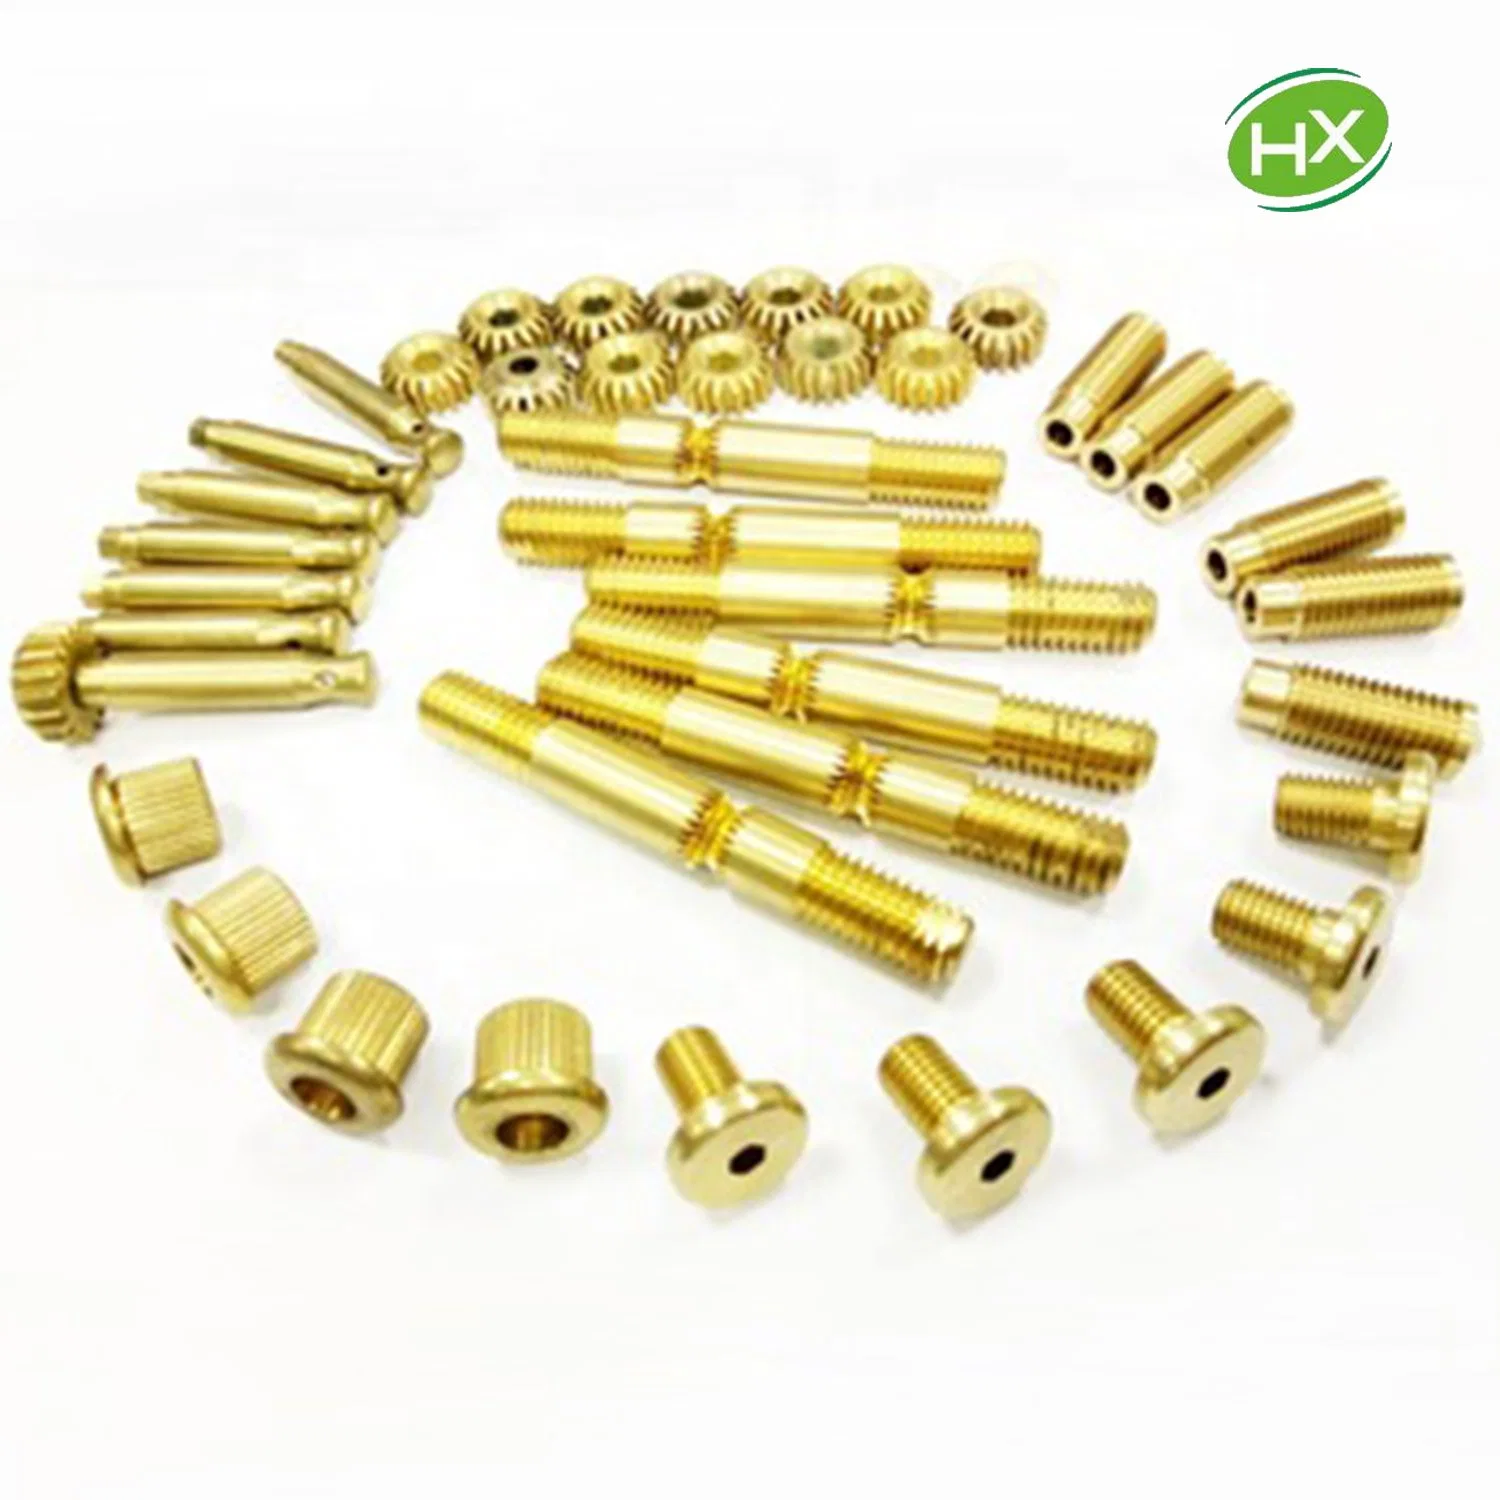 CNC Machine Brass/Copper with Casting Auto Parts/Hardware Accessories